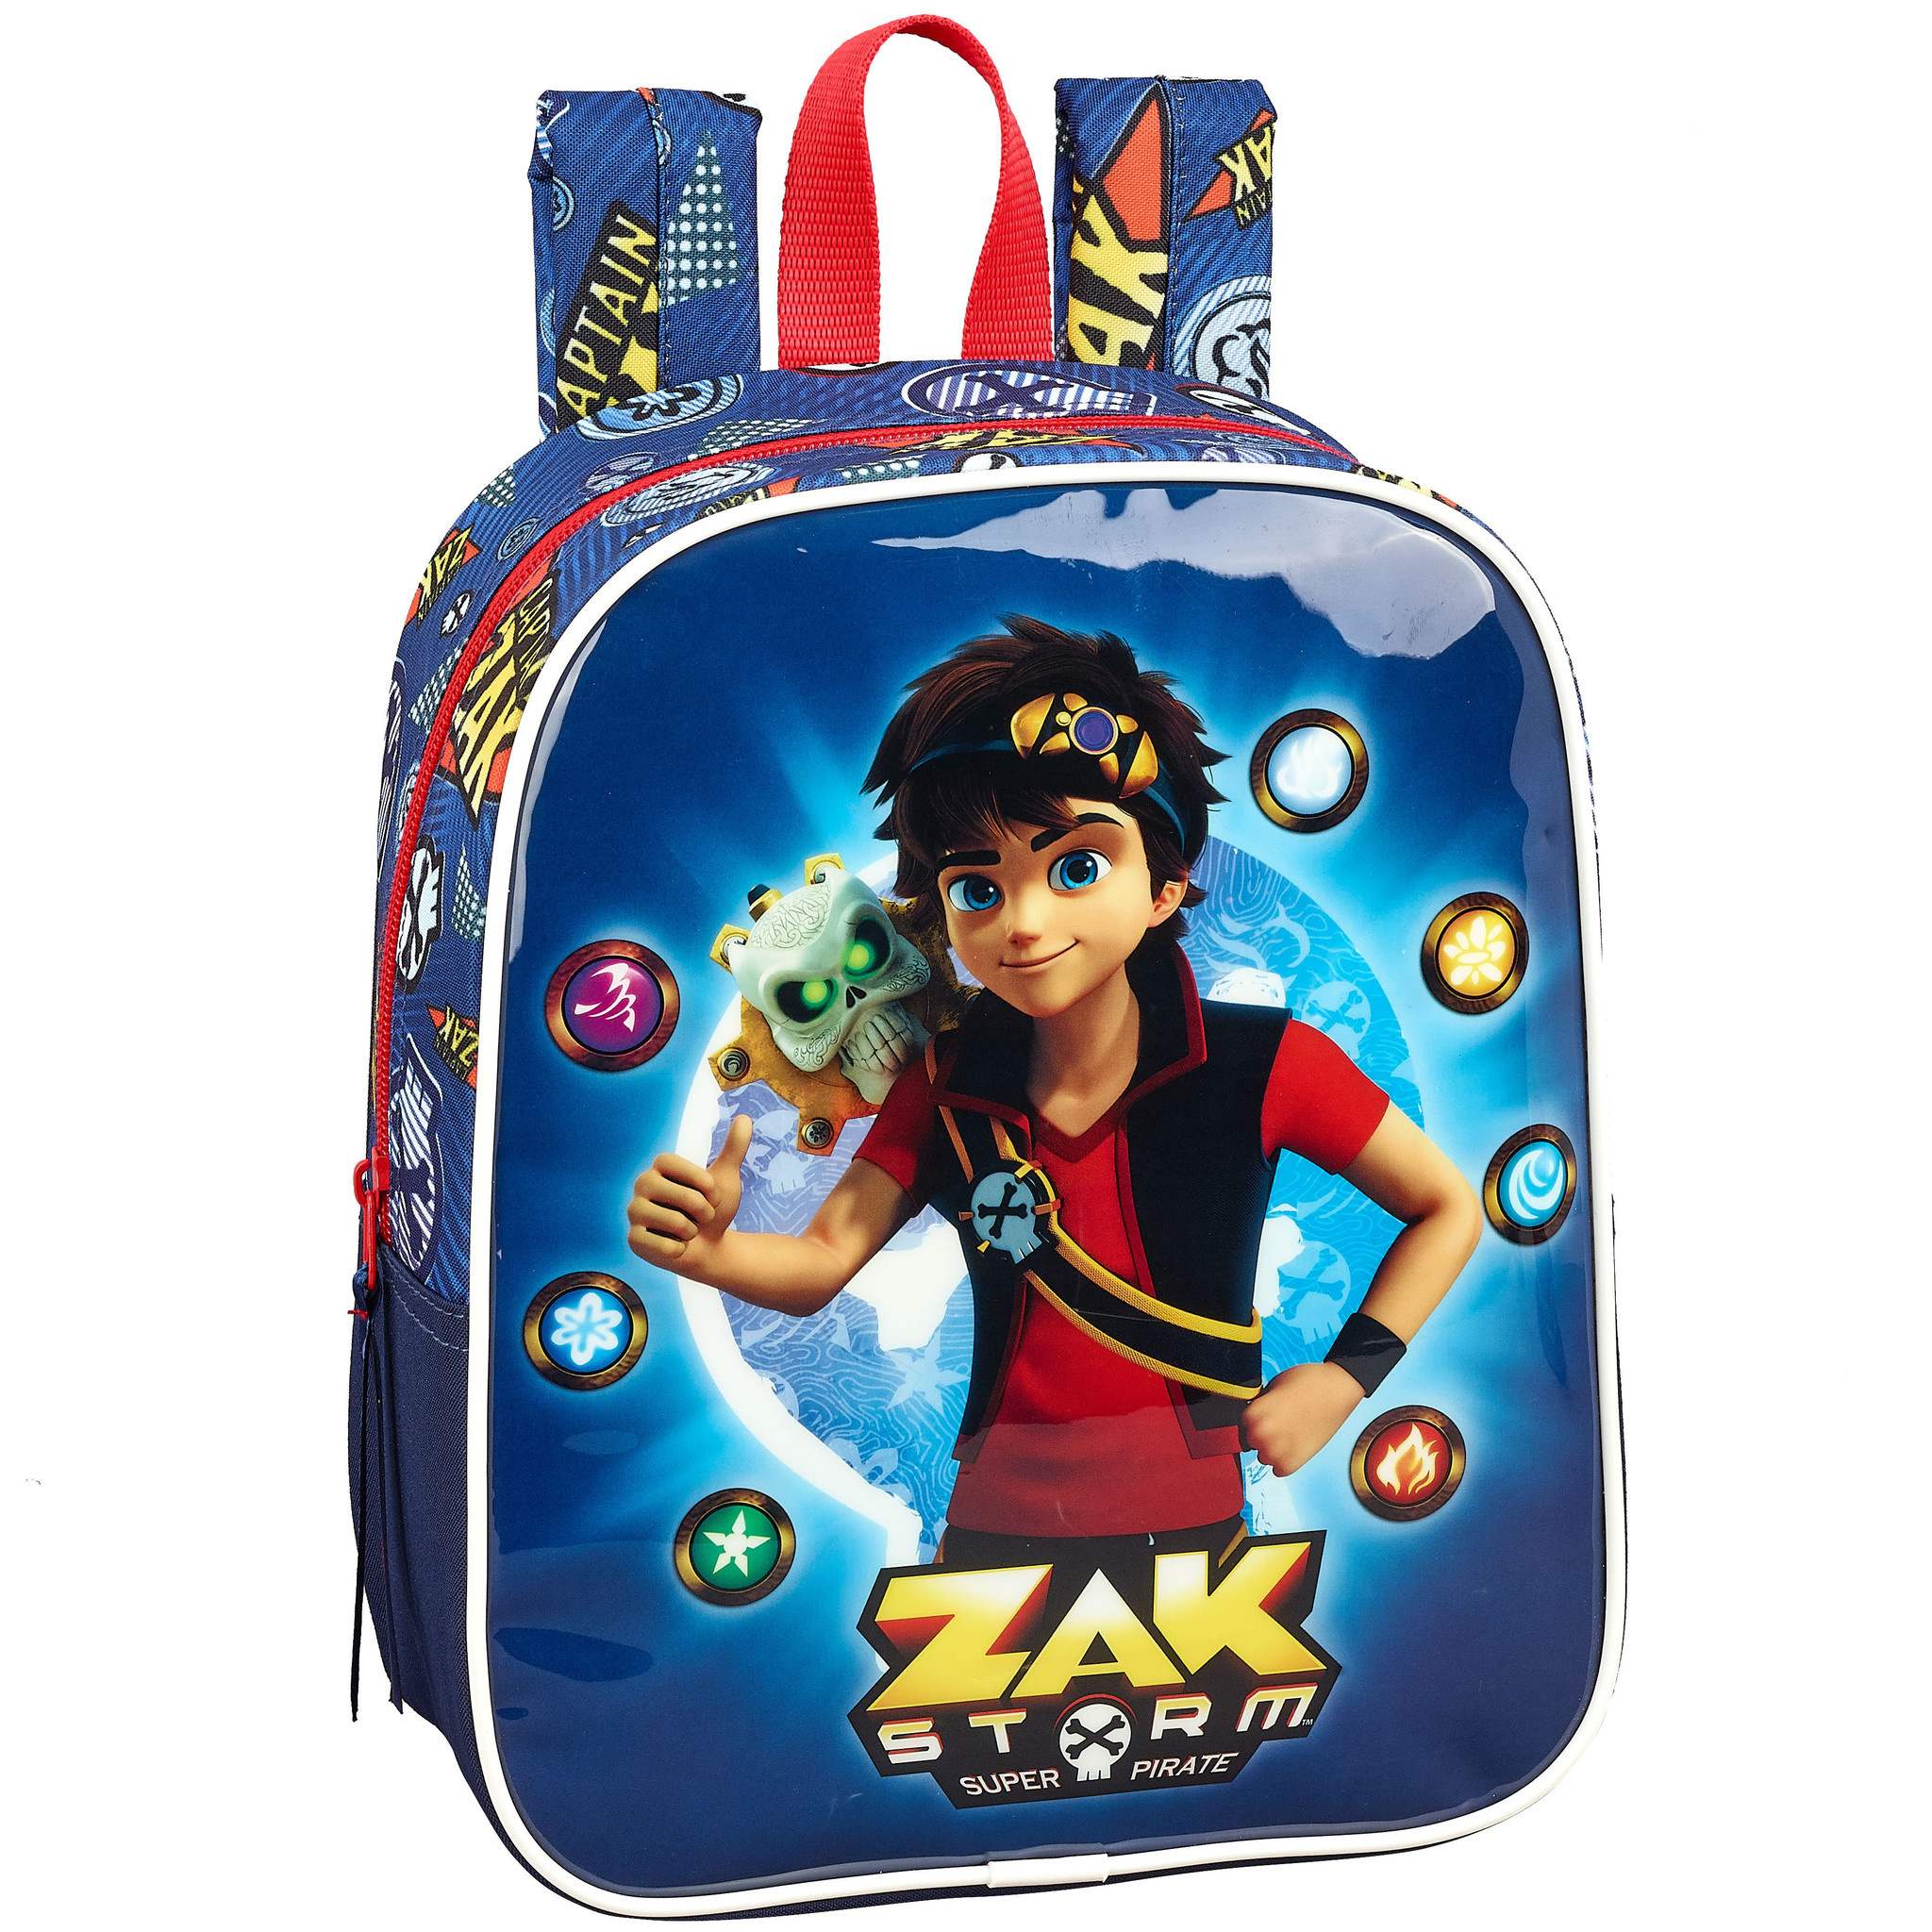 Zak Storm Captain Bag - backpack - 27 cm - Blue